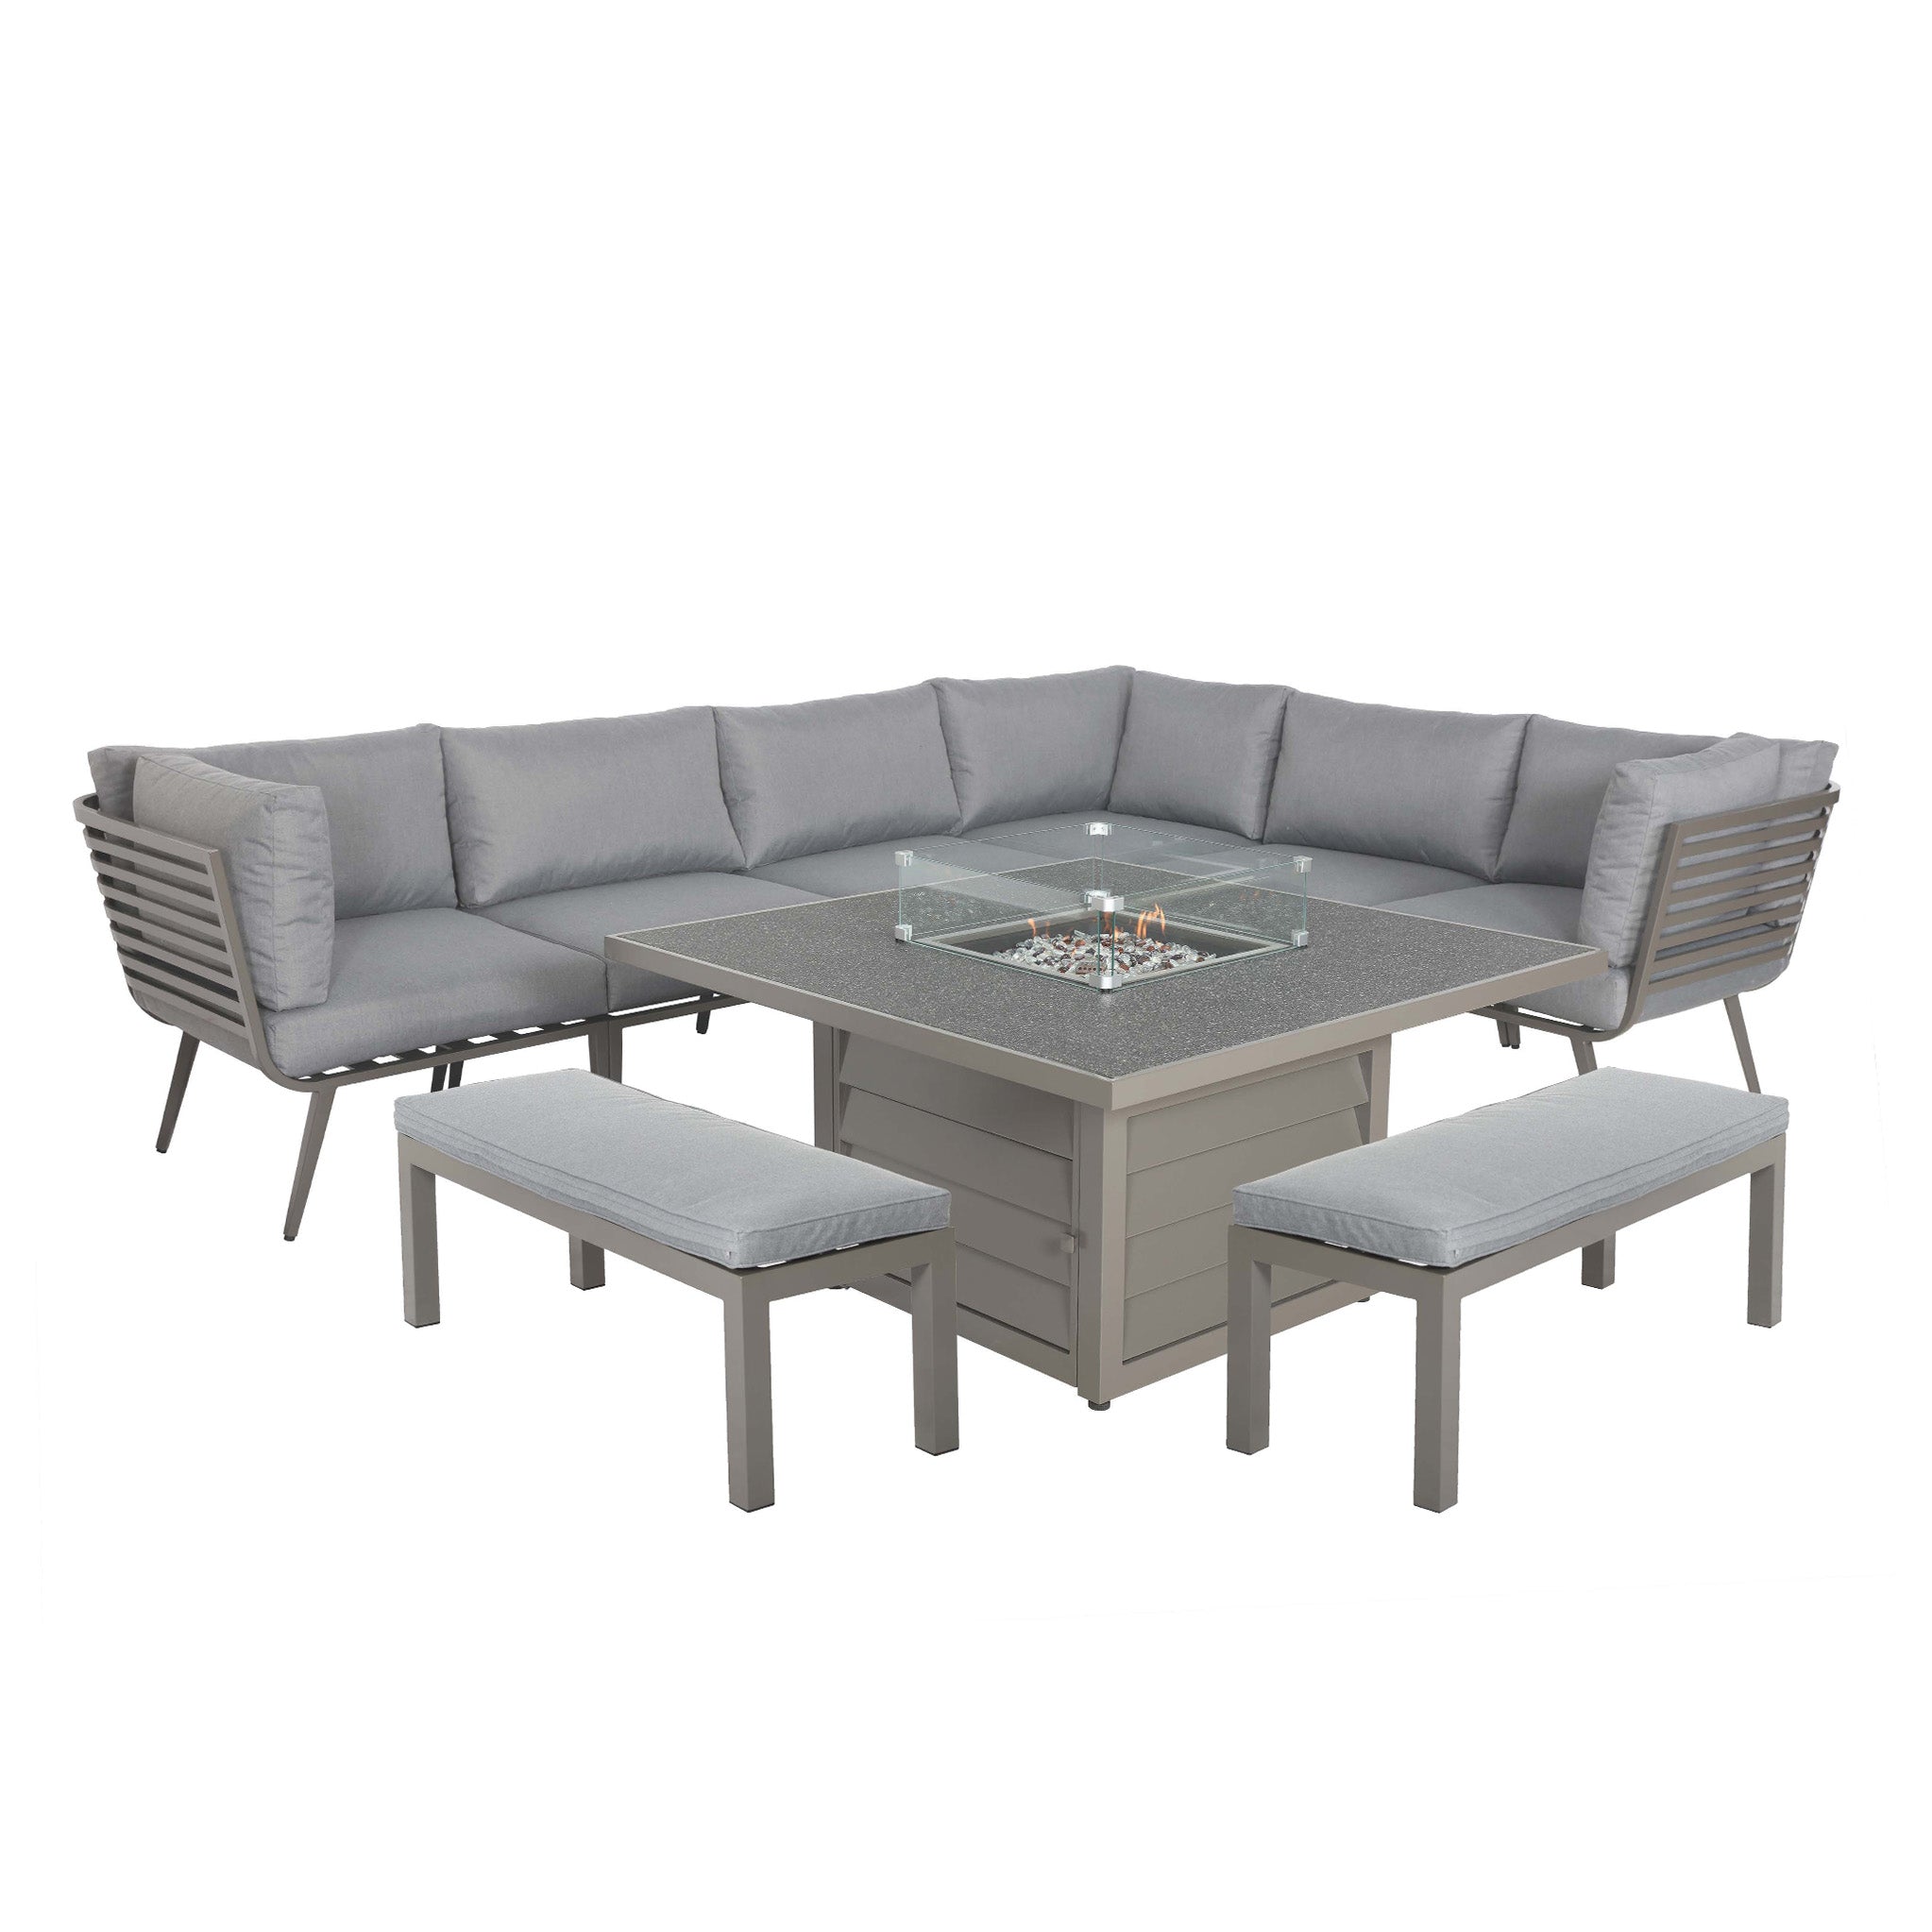 Mayfair 120cm Corner Sofa Fire Pit Table Garden Lounge Set